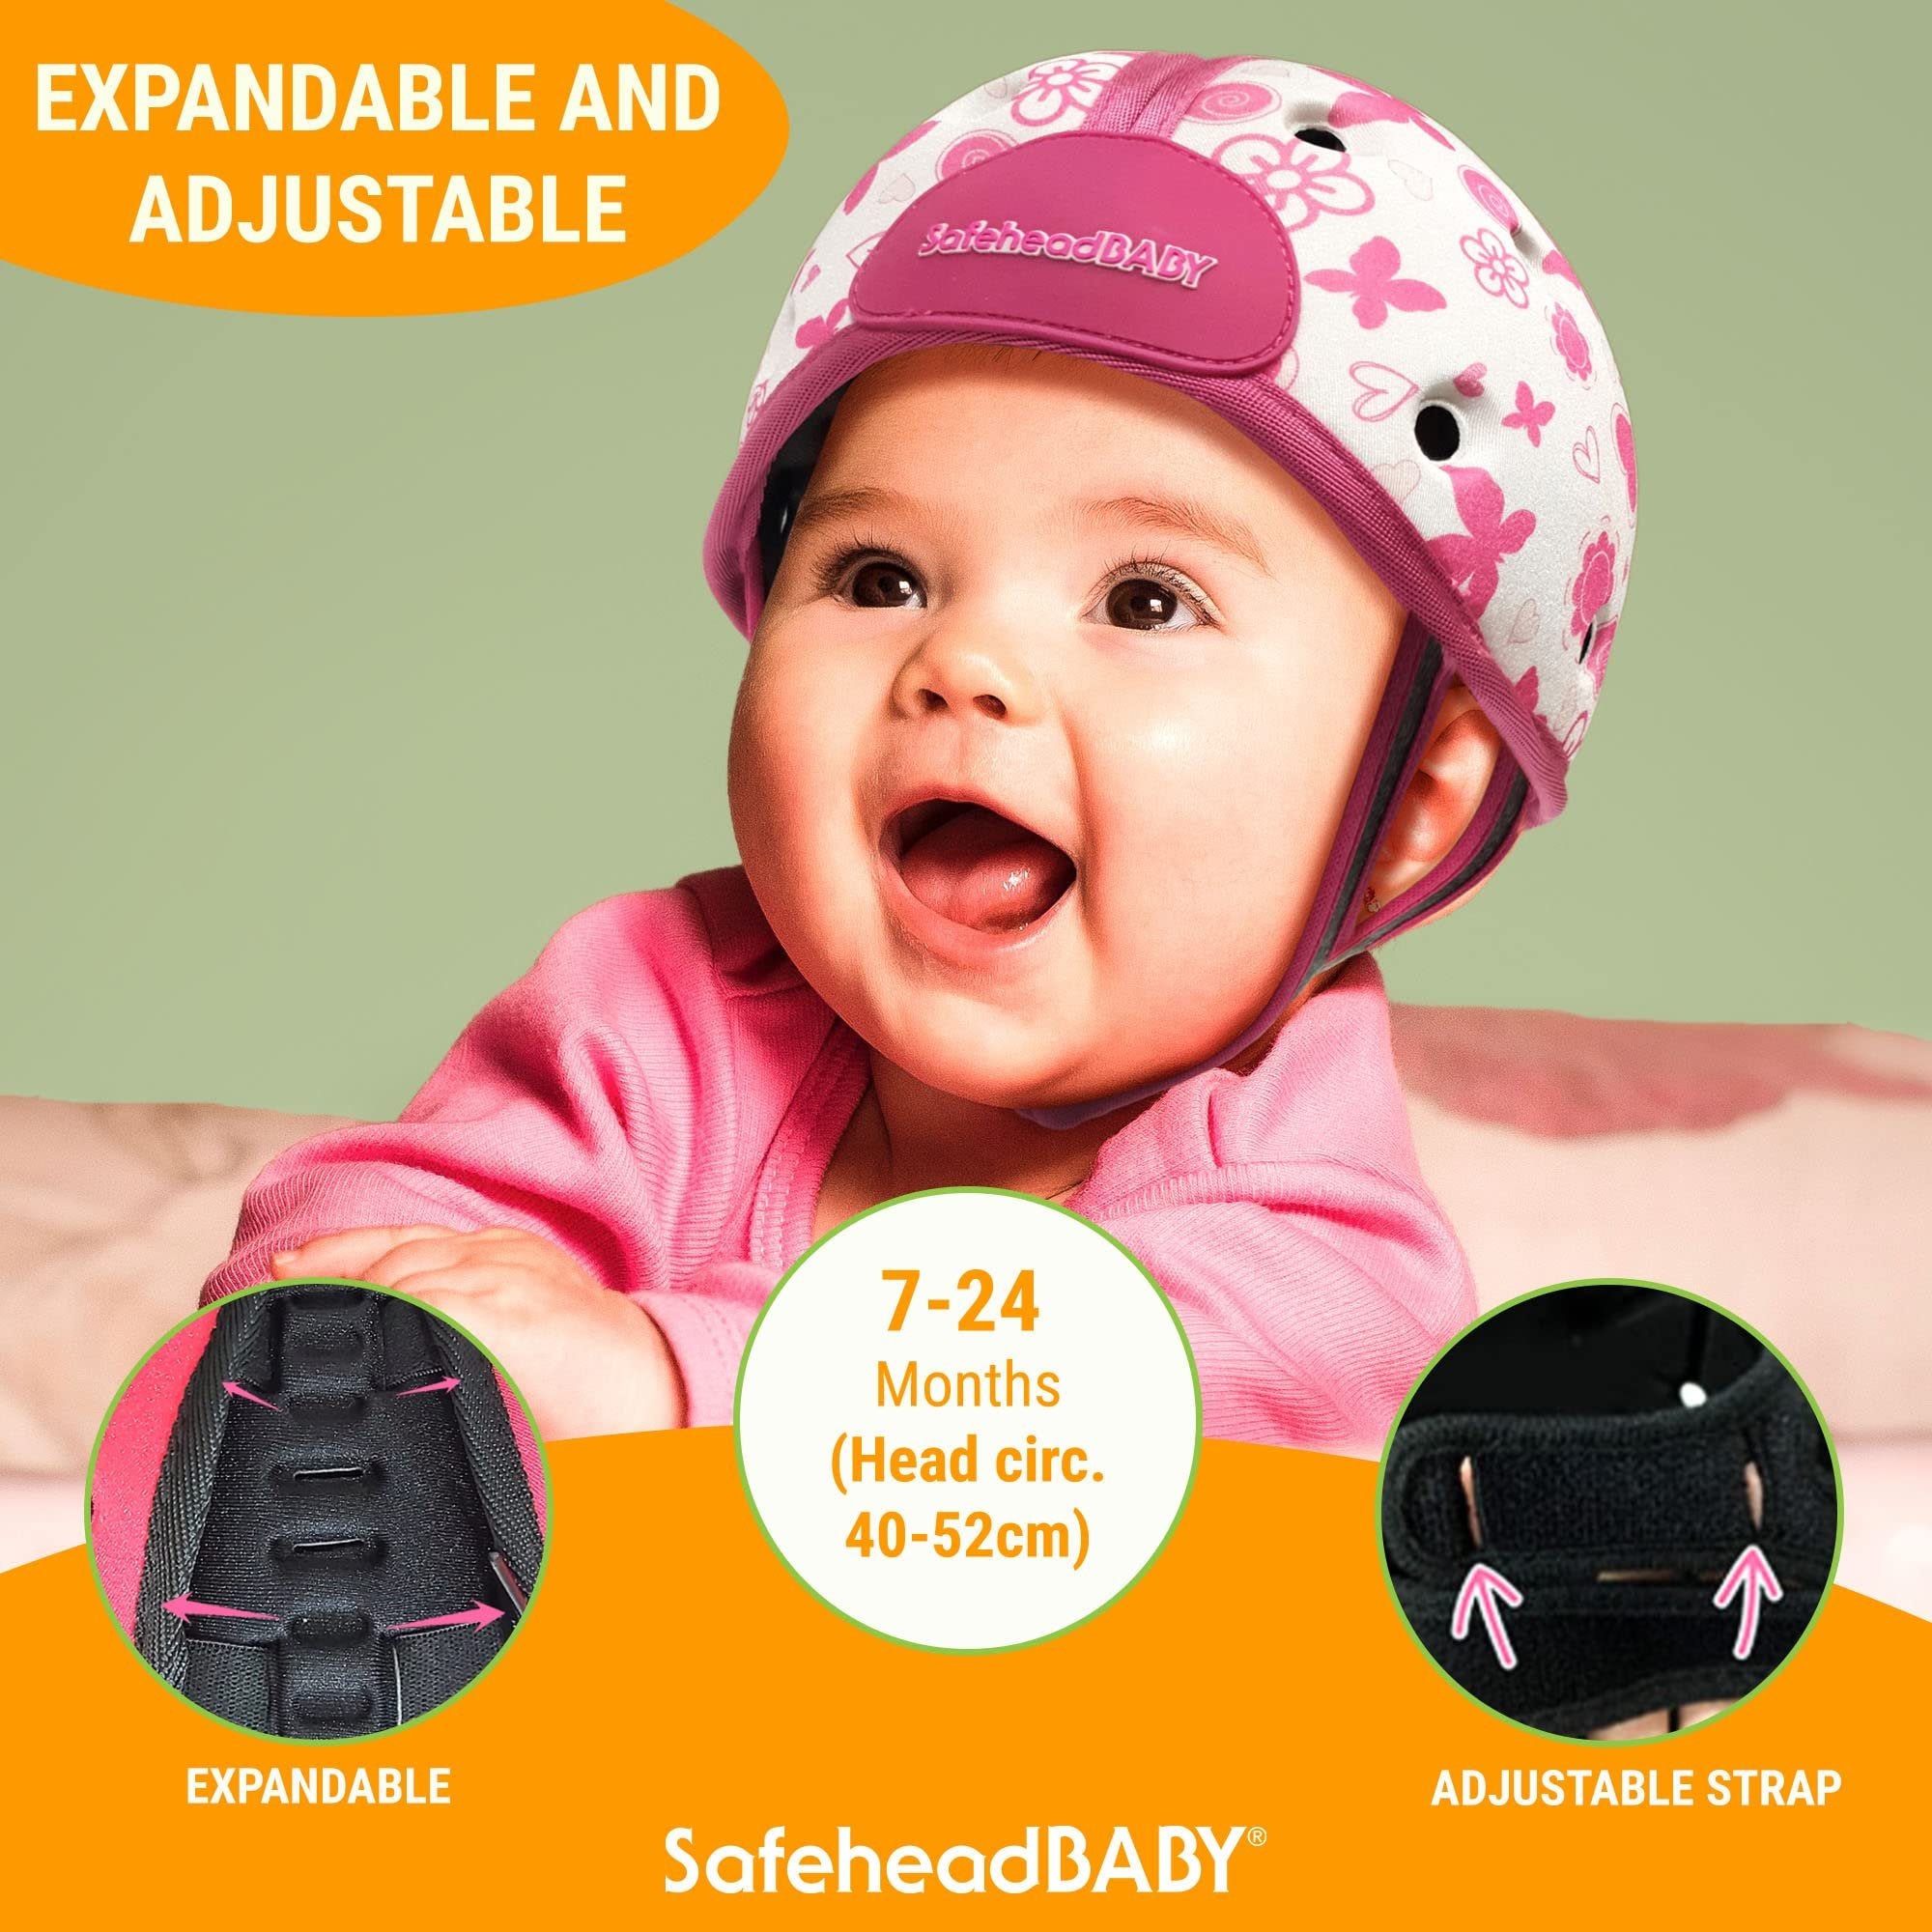 SafeheadBABY Infant Safety Helmet, Expandable 7-24M, Ladybird Orange, Walking & Crawling Toddler Head Protection